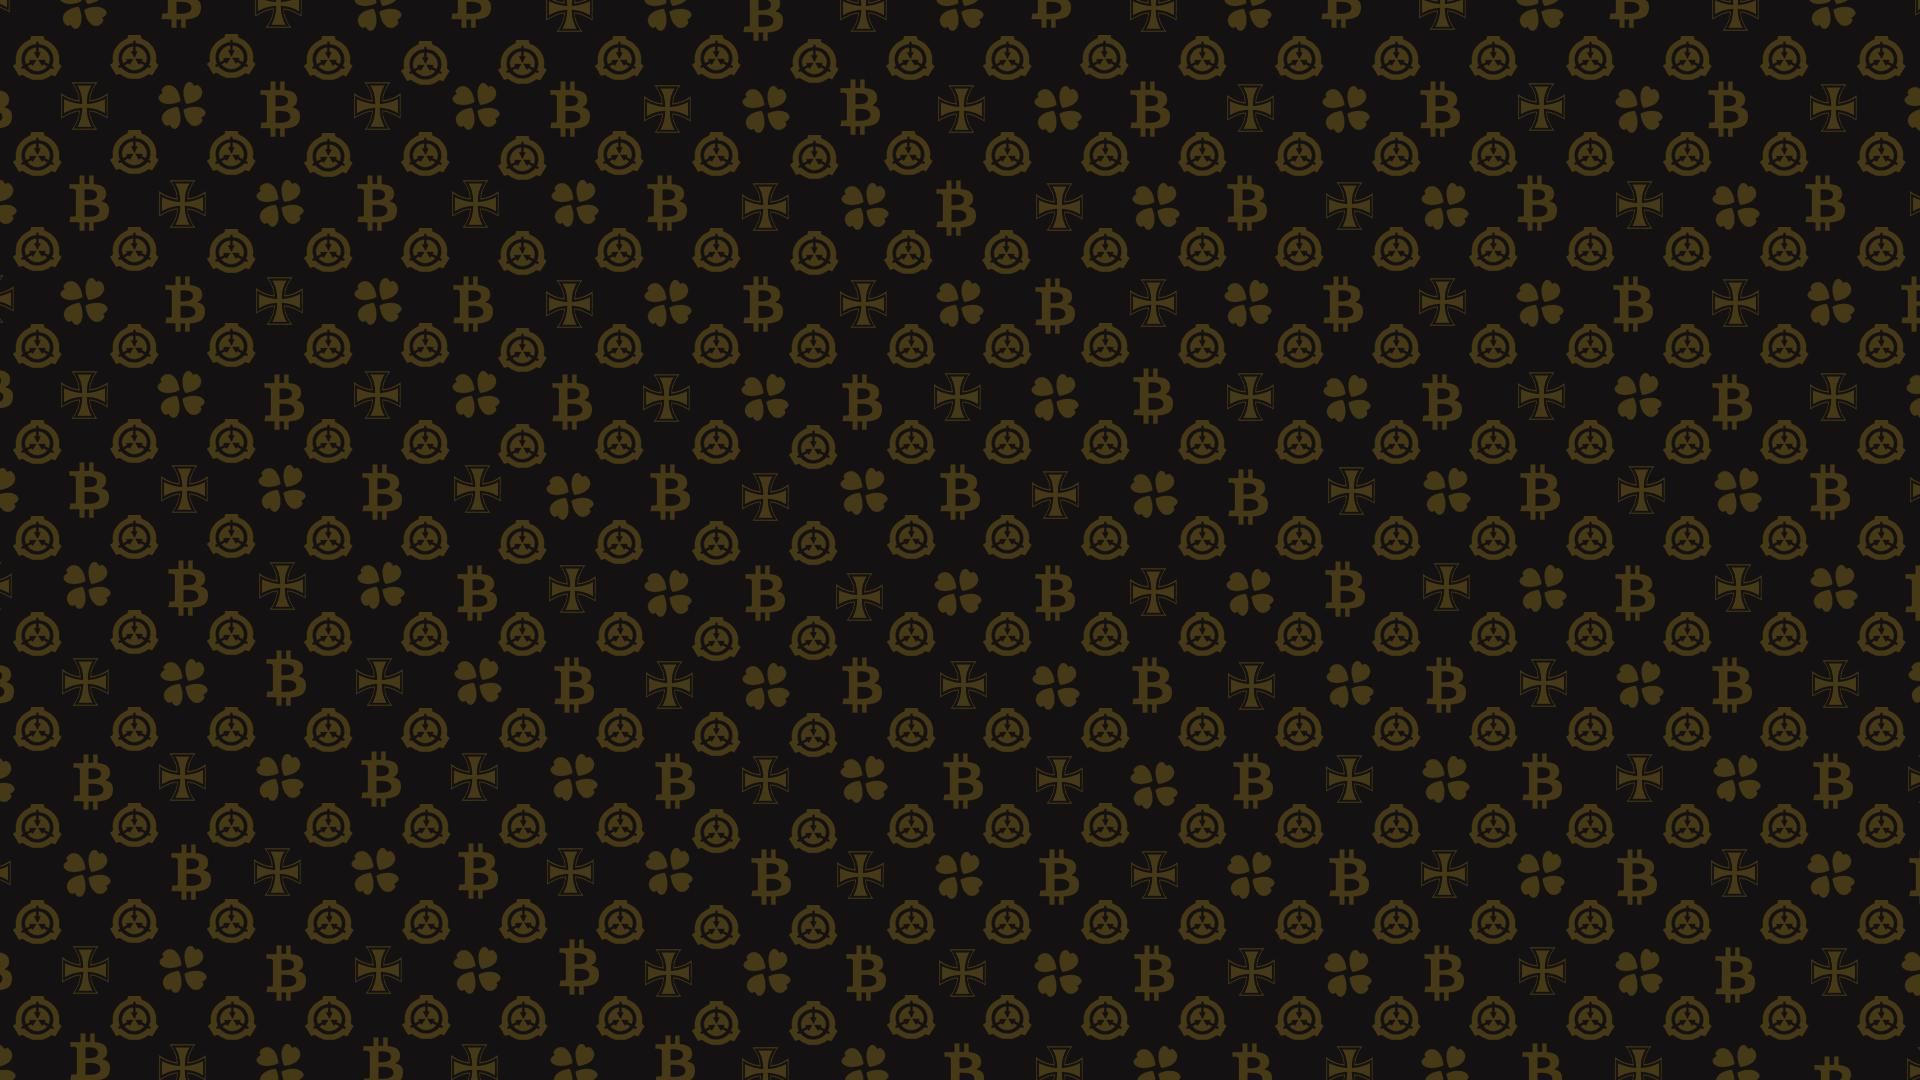 HD wallpaper, Scp, Scp Foundation, 4Chan, Cross, Bitcoin, Pattern